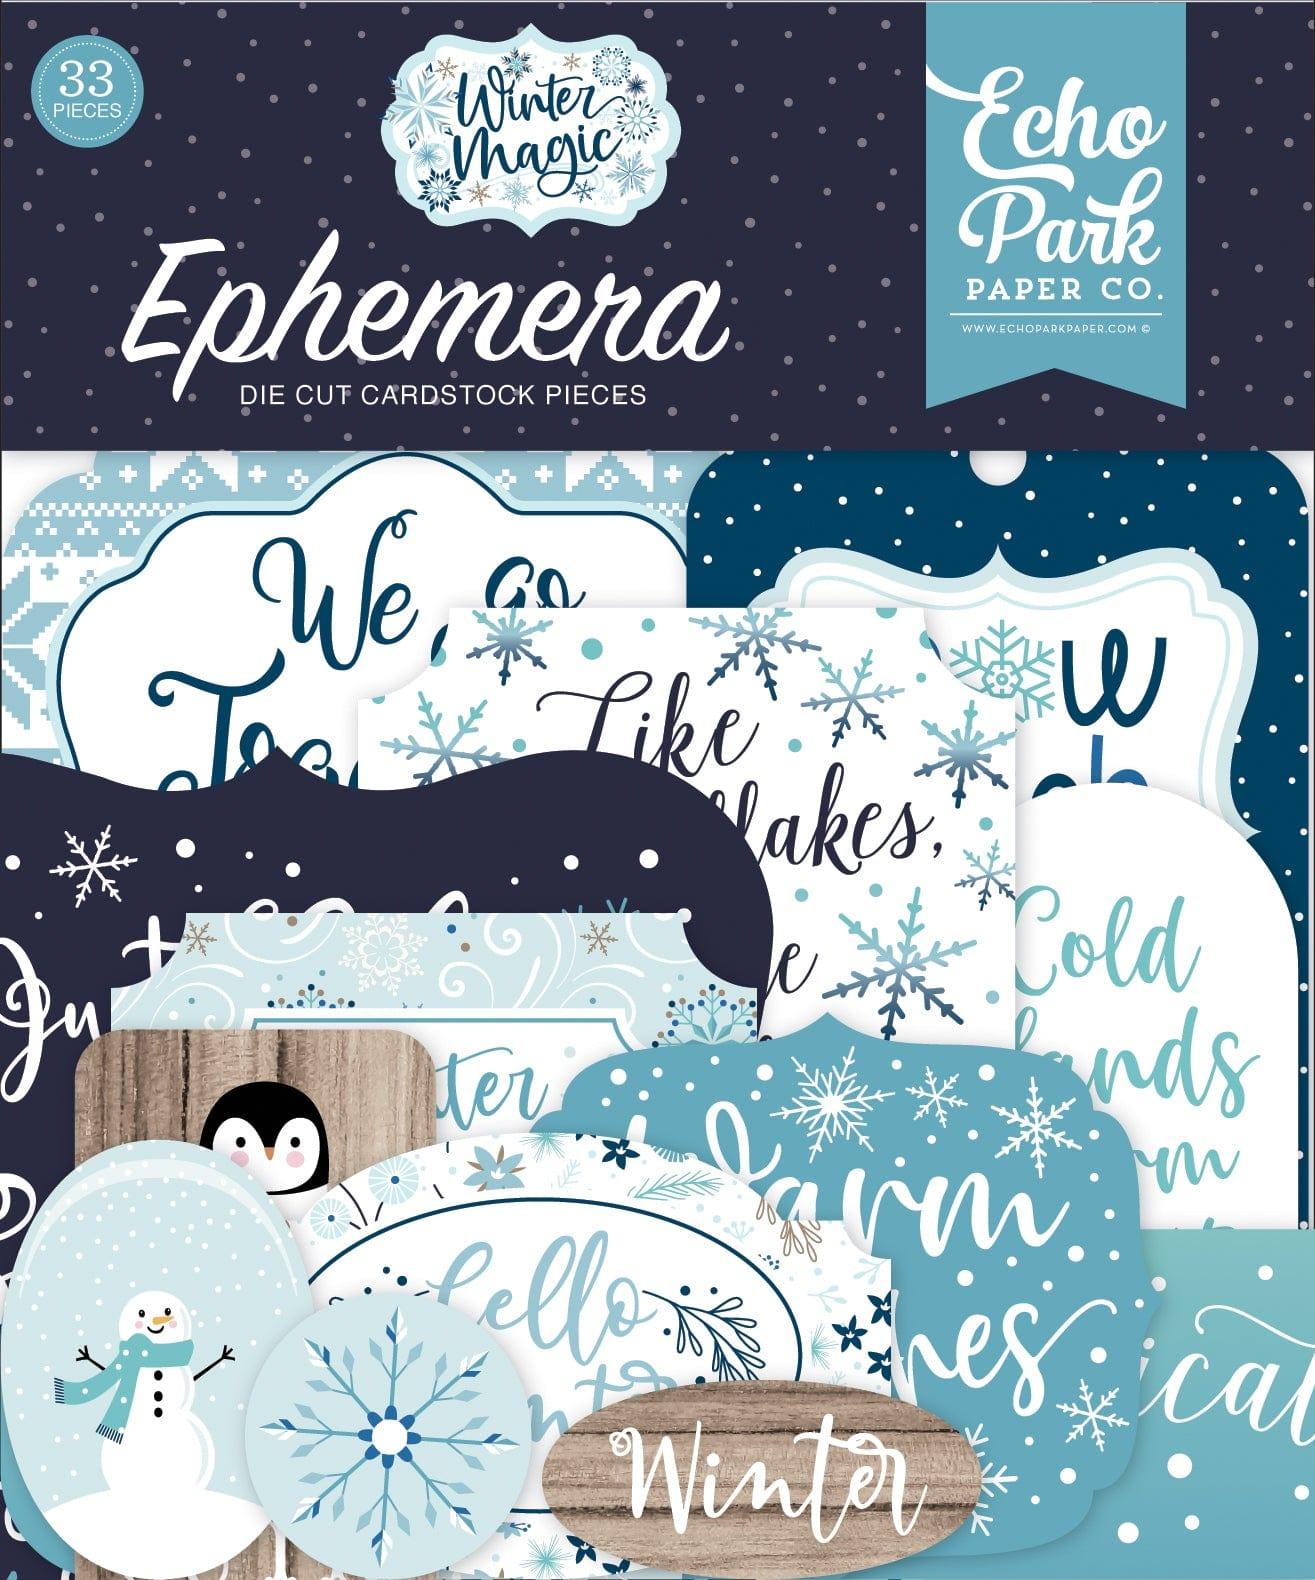 Winter Magic Collection 5 x 5 Ephemera Die Cut Scrapbook Embellishments by Echo Park Paper - Scrapbook Supply Companies